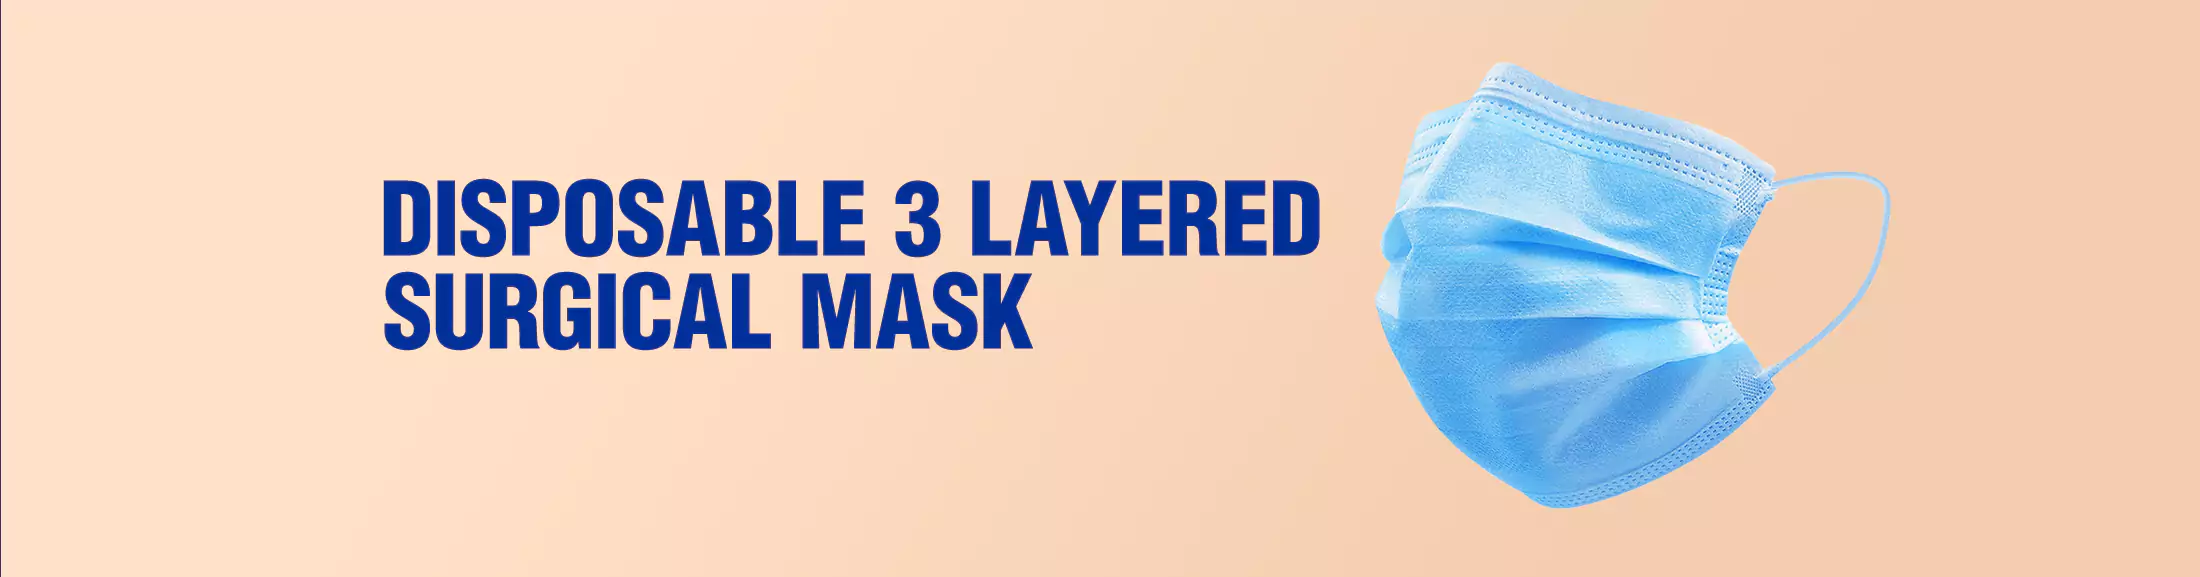 Disposable Surgical Masks